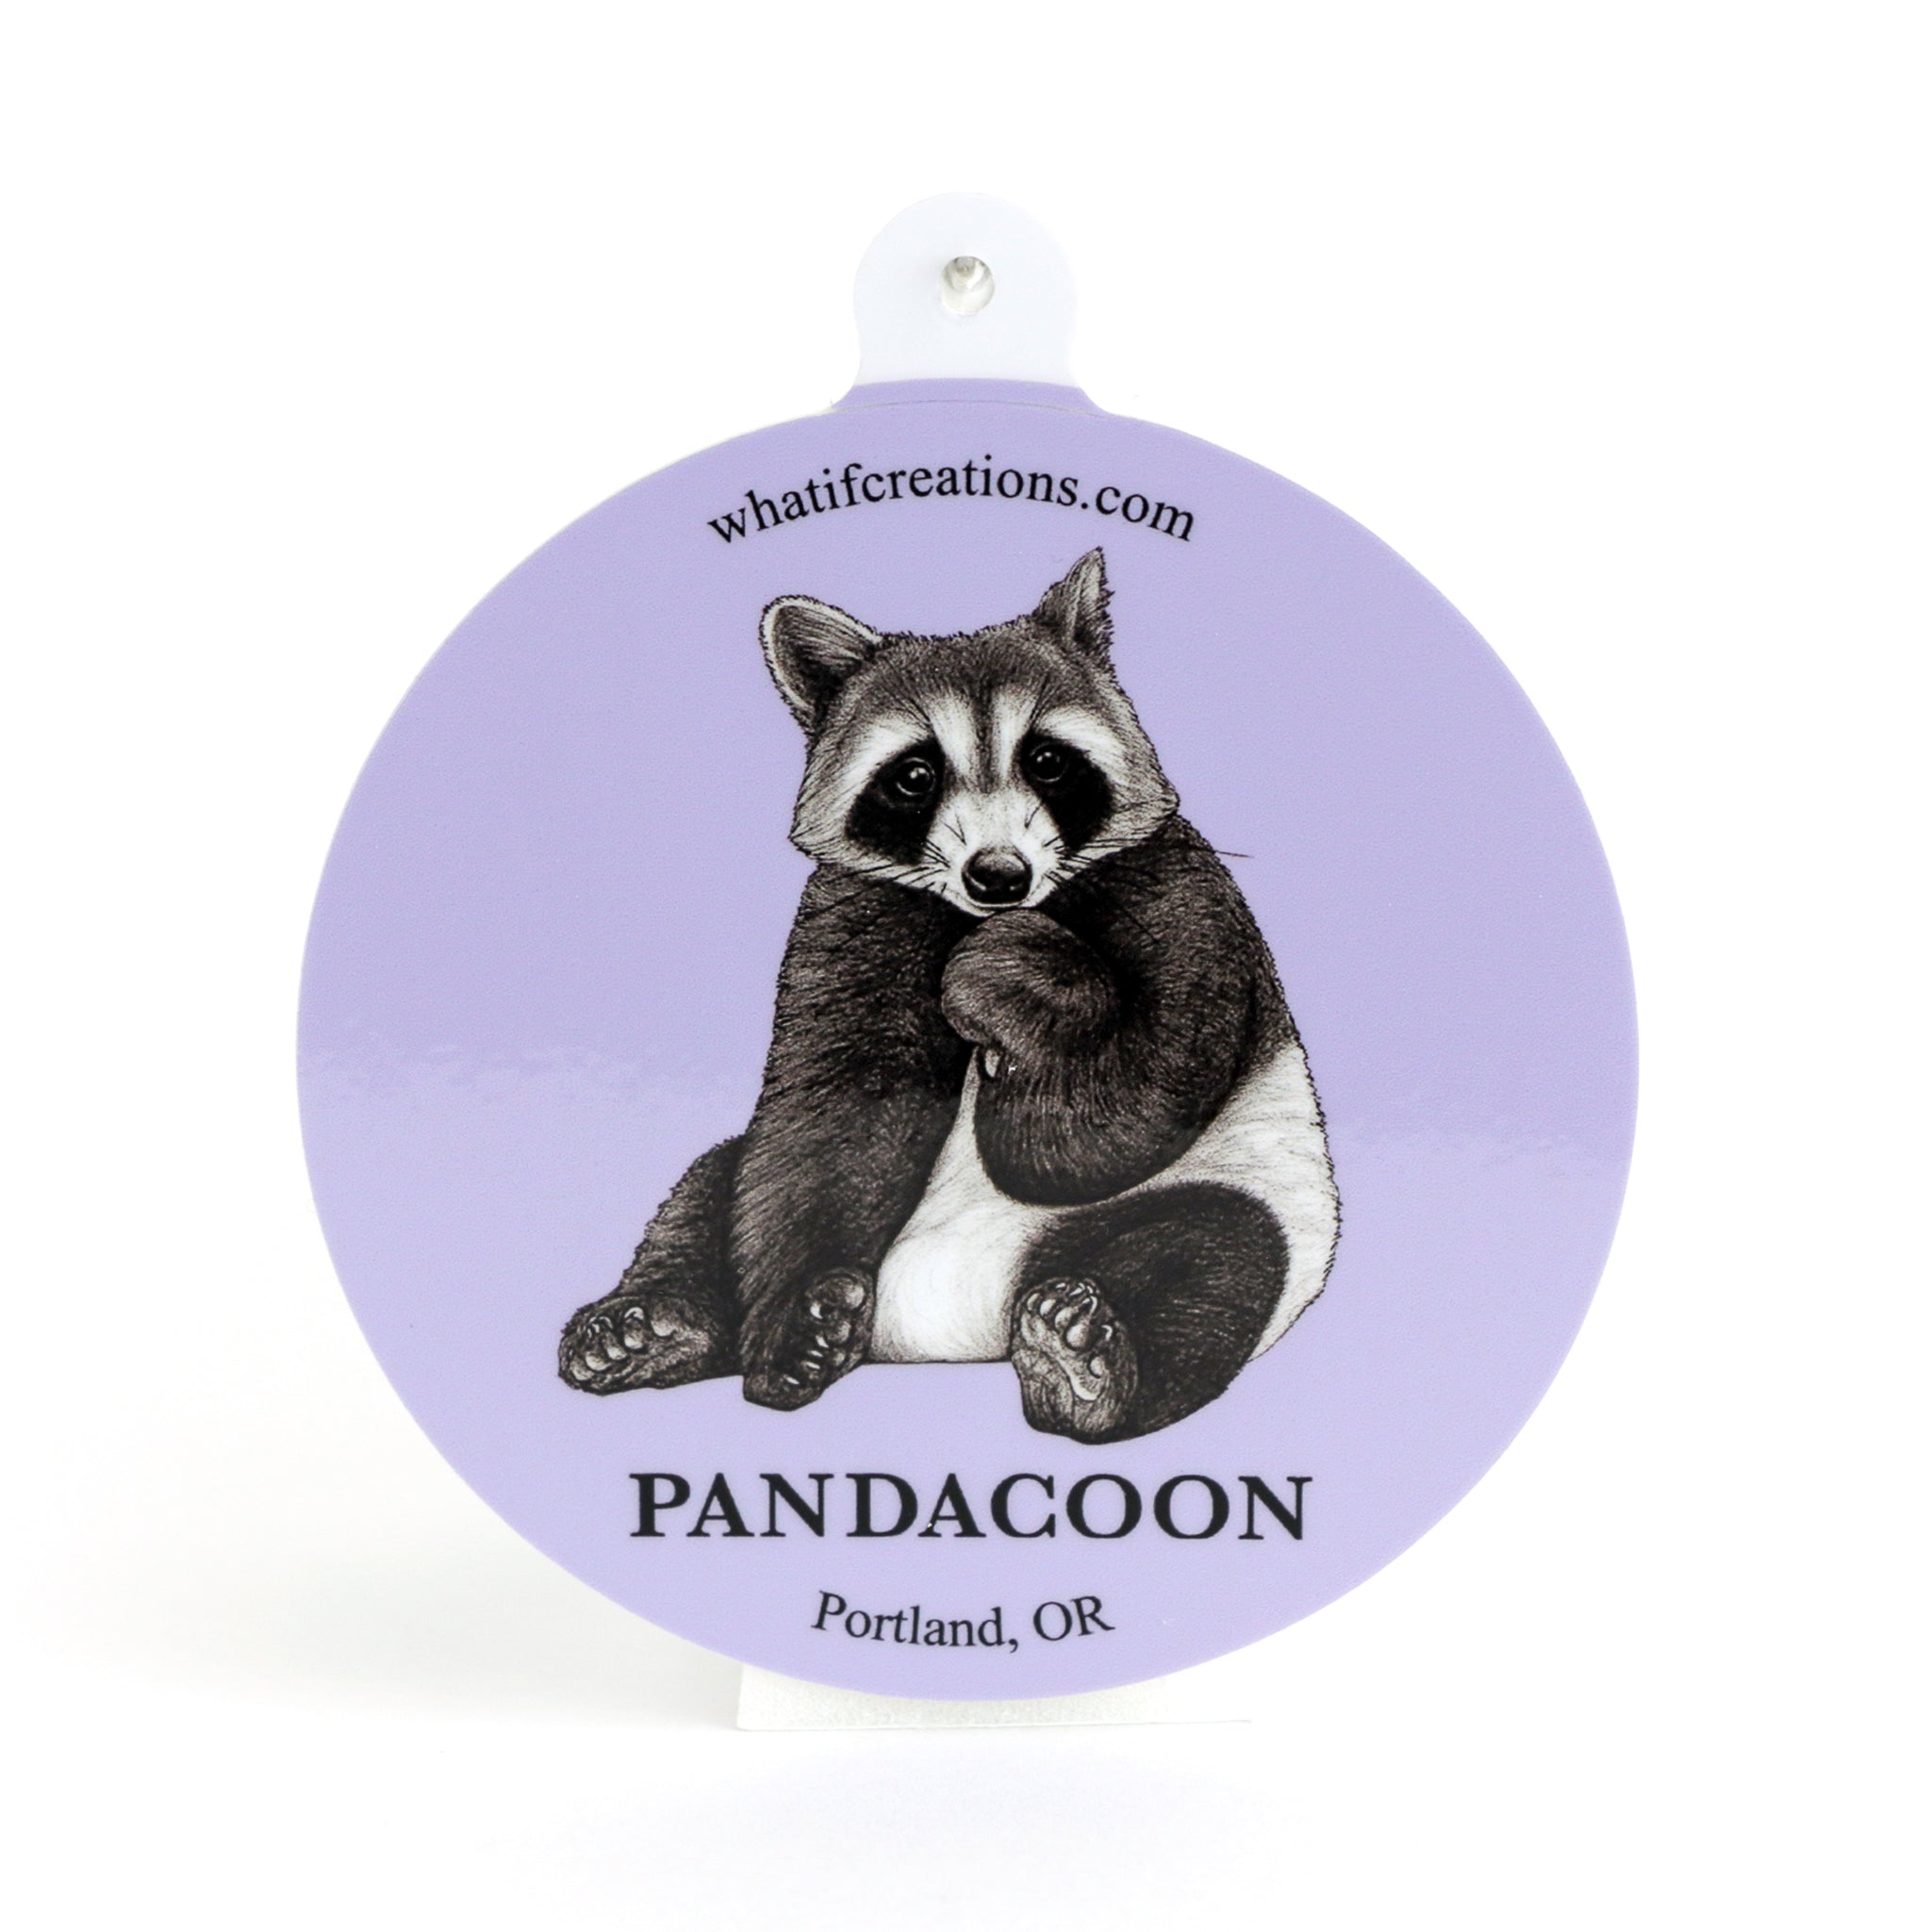 Pandacoon | Panda + Raccoon Hybrid Animal | 3" Vinyl Sticker